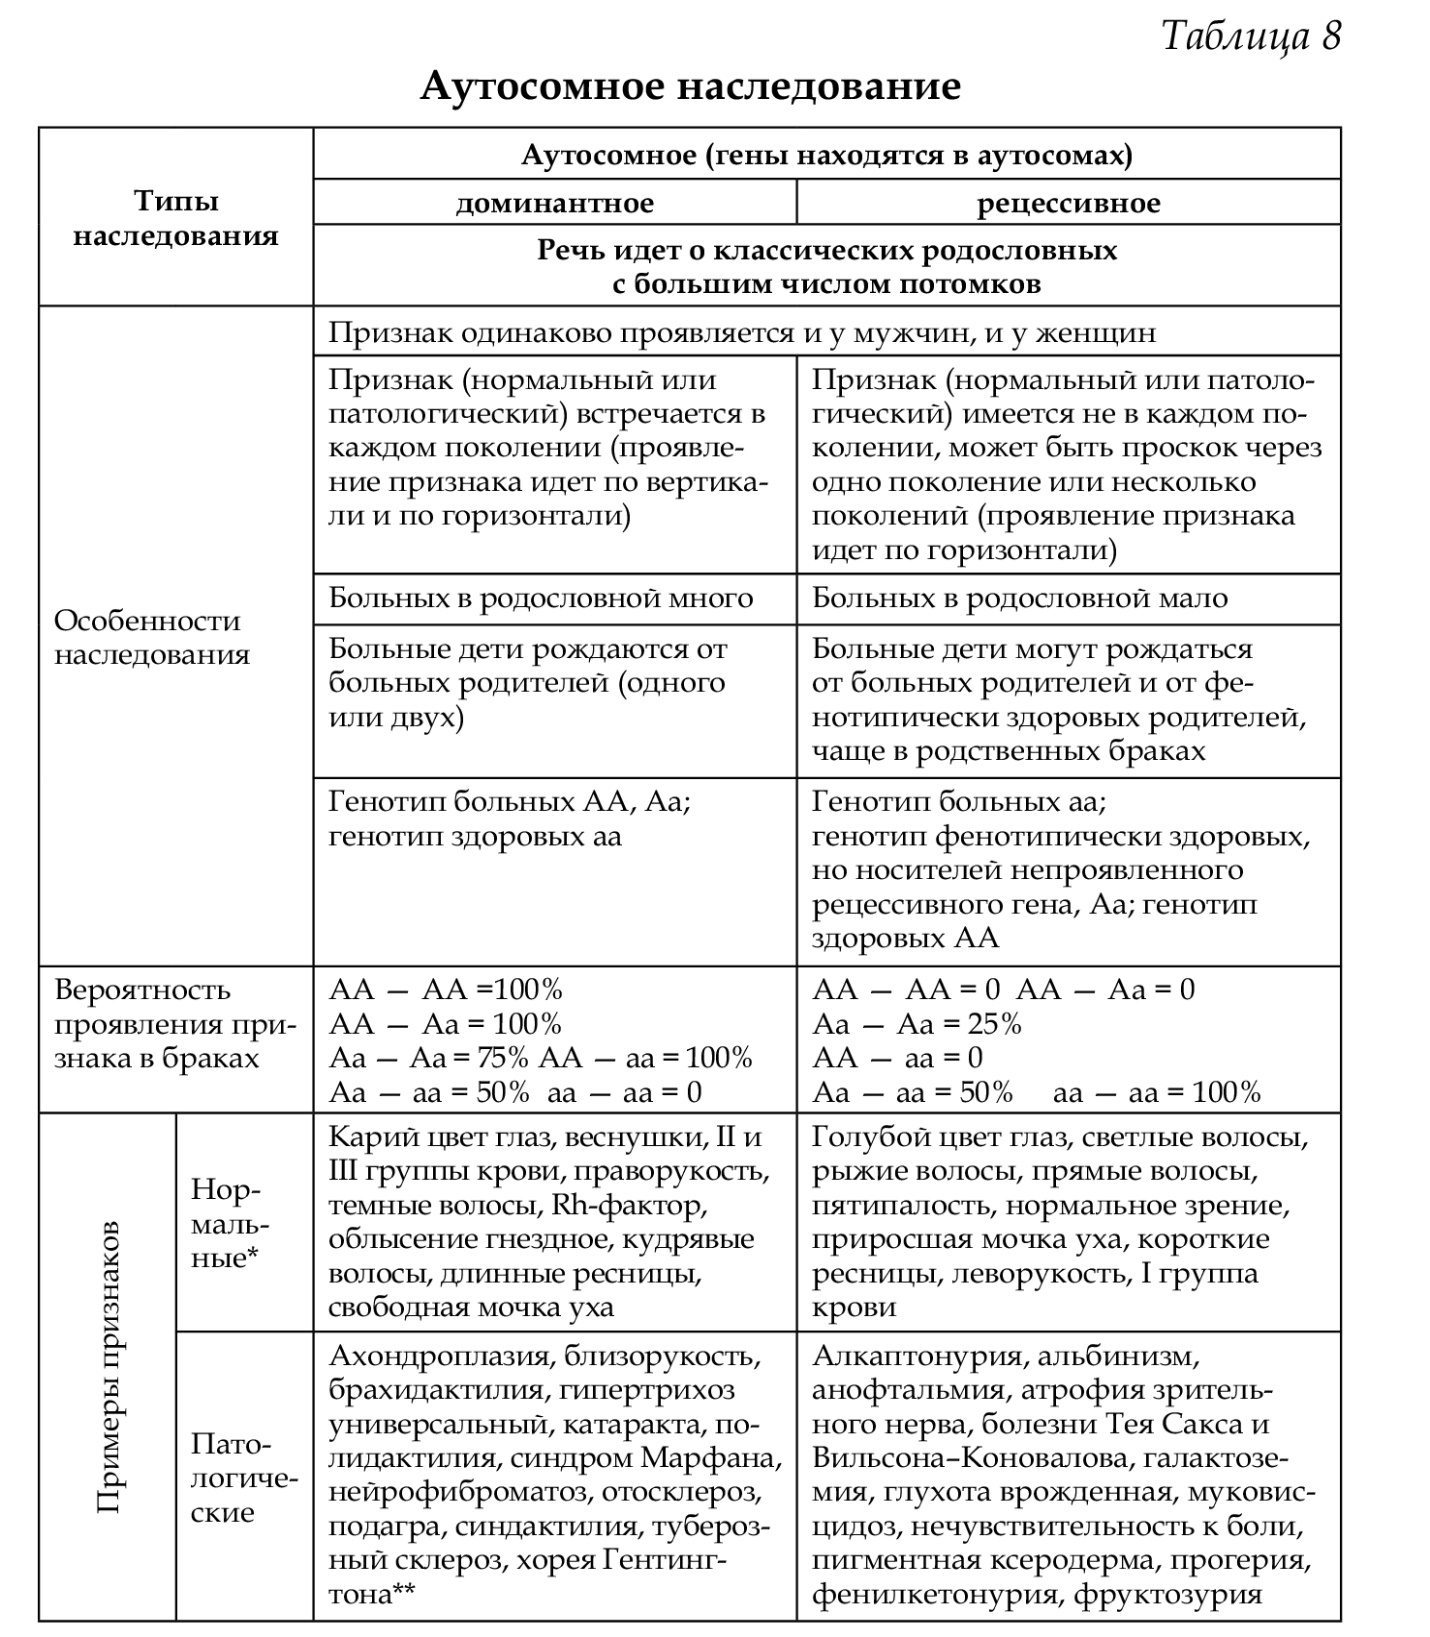 http://www.biospsma.spb.ru/szgmu_site/genetics/kostukevich_biology_kletky_final.page157.jpg